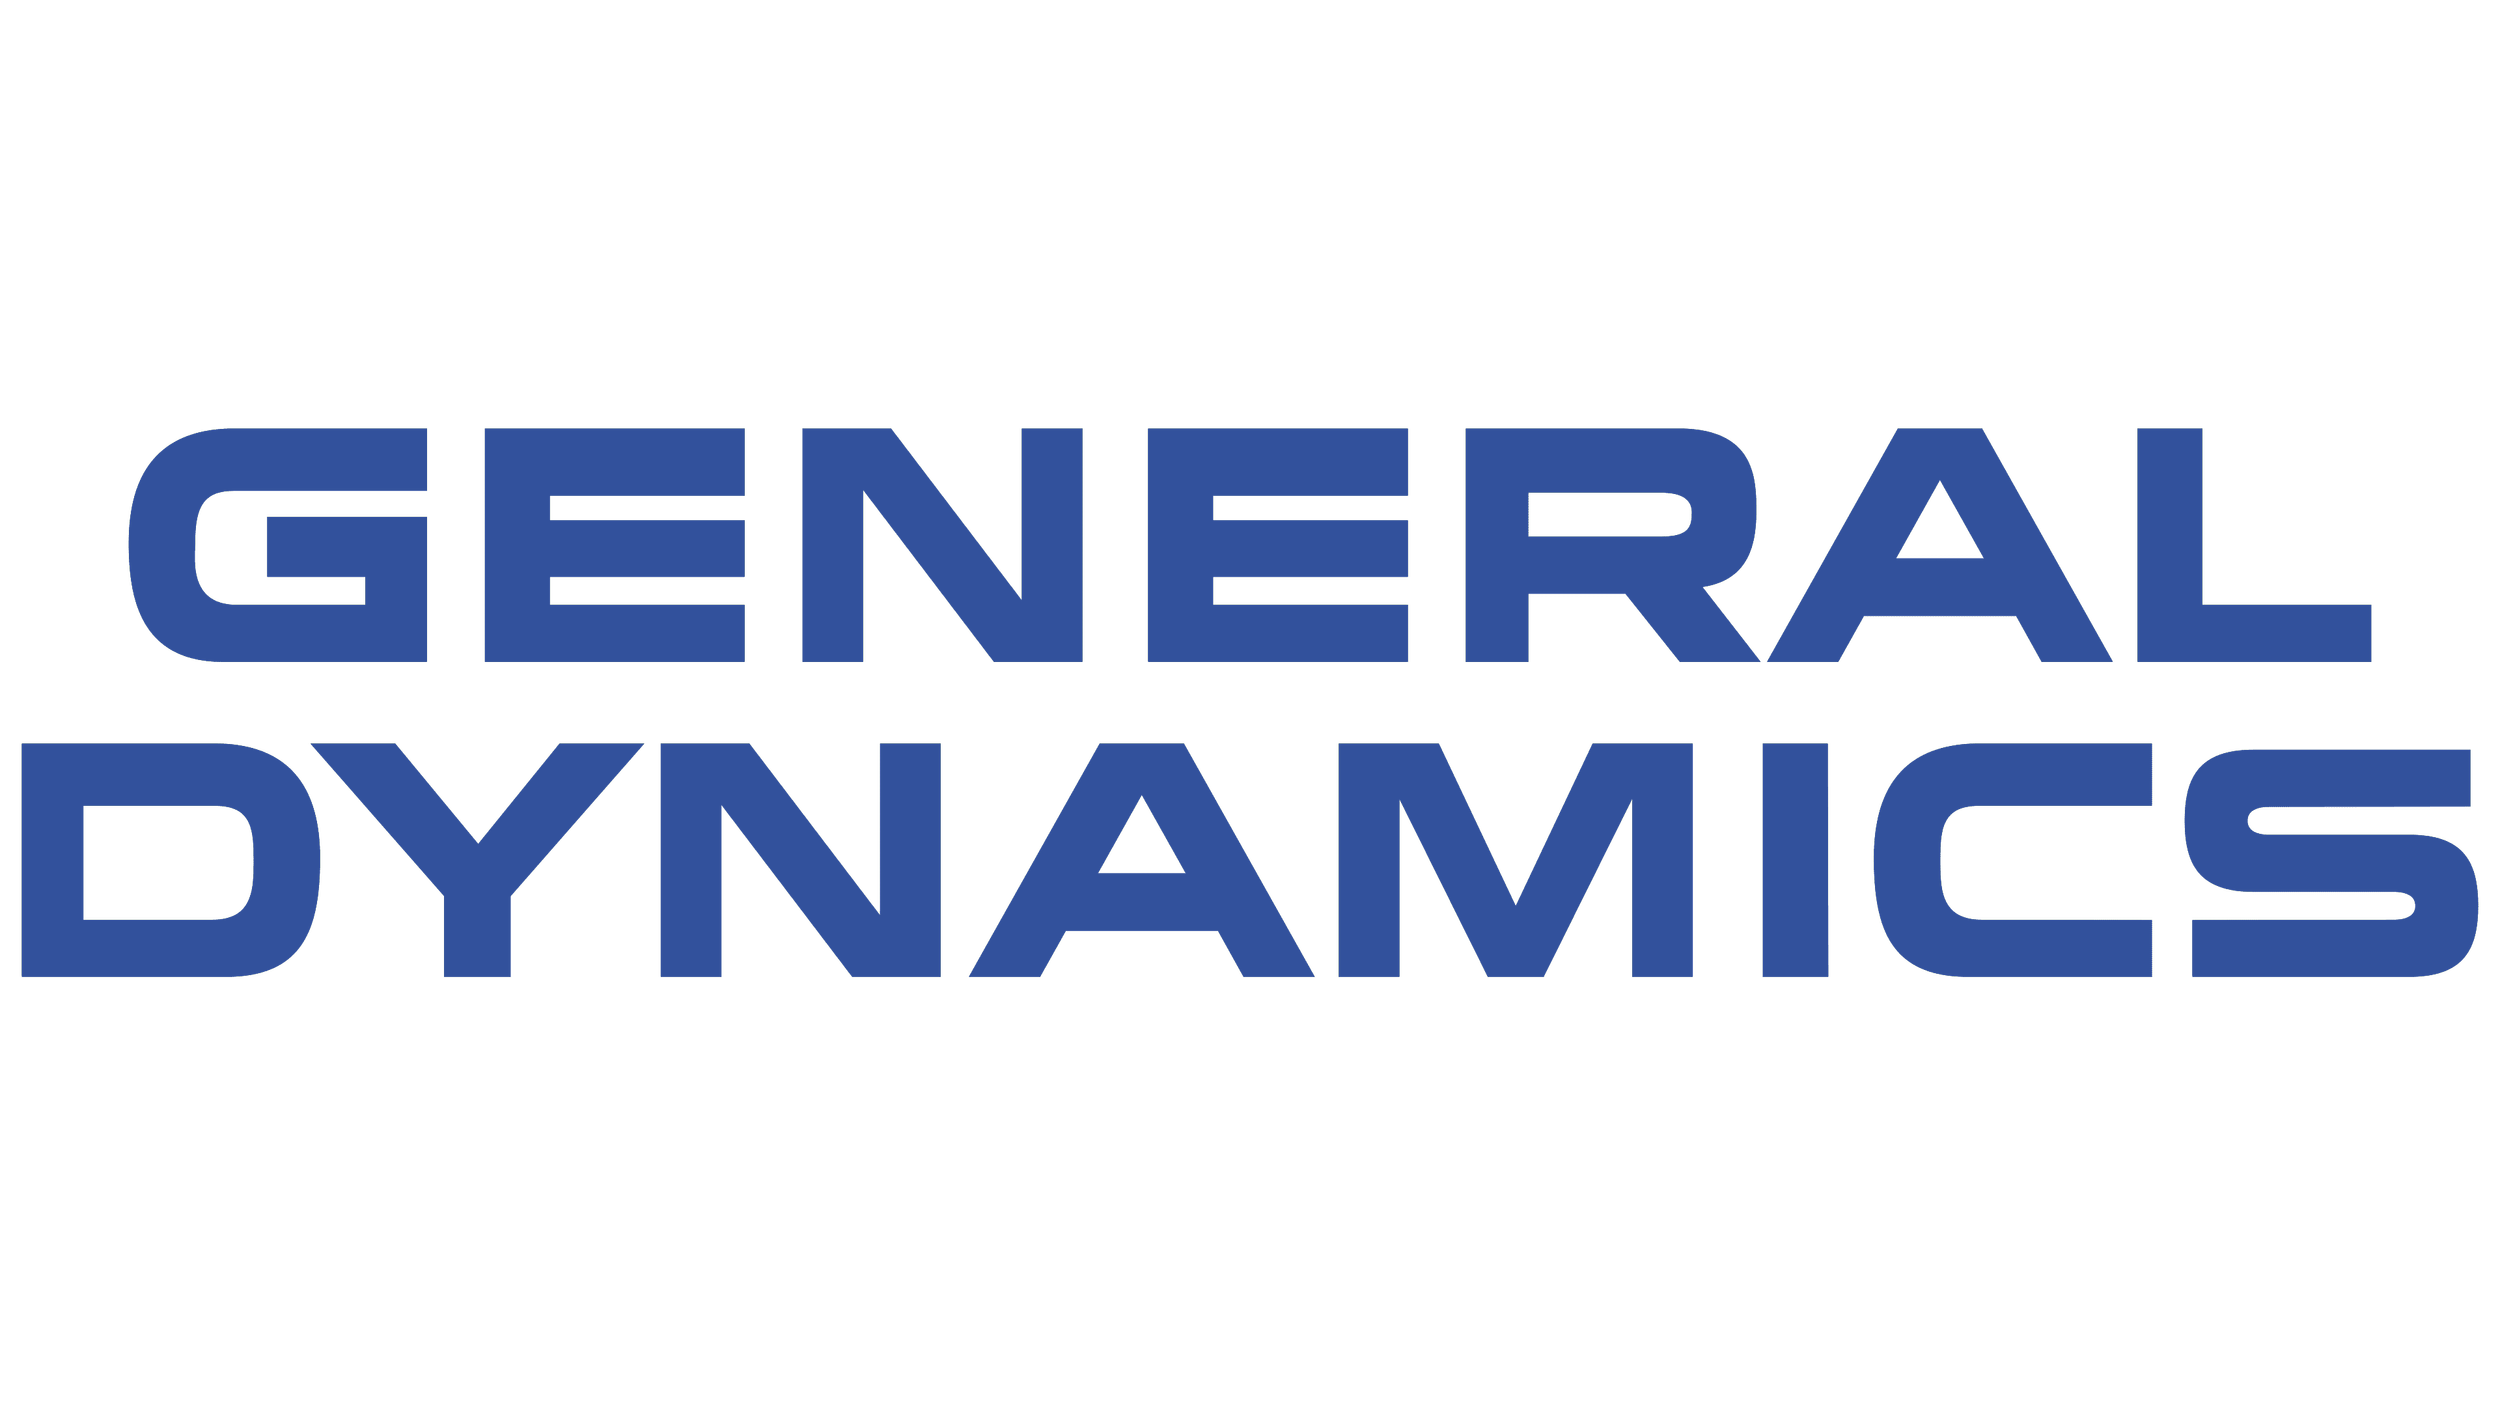 MACH37 Mentor General Dynamics logo.png